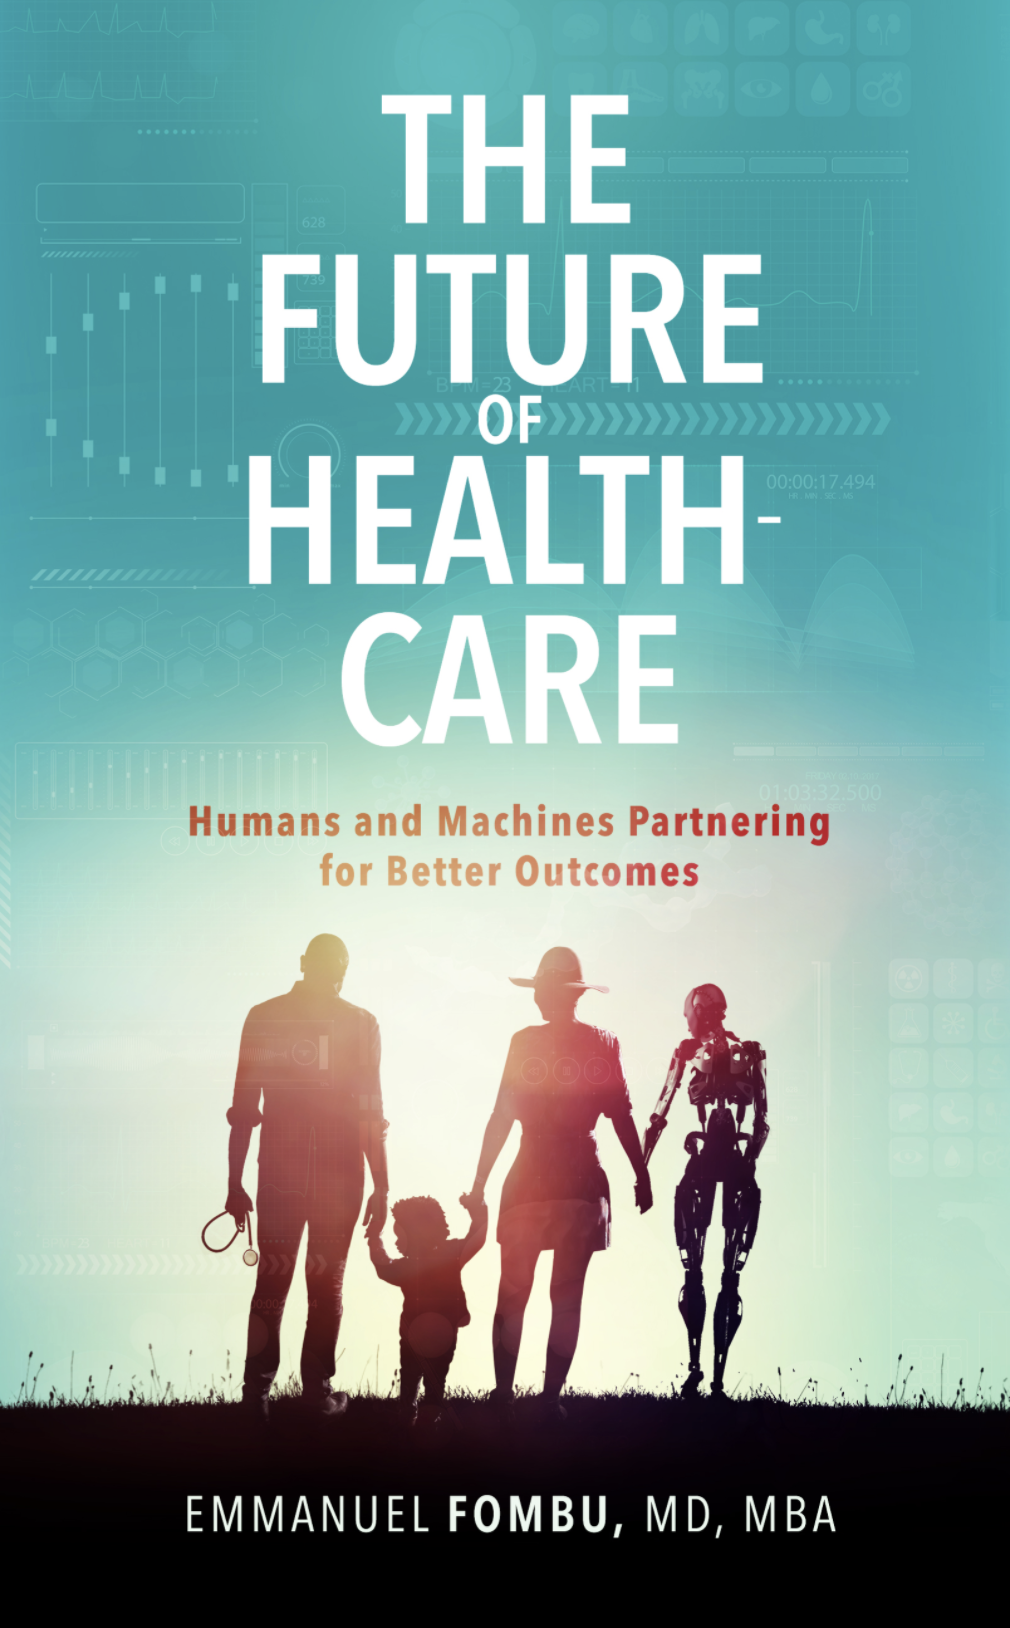 The Future of Healthcare book cover image